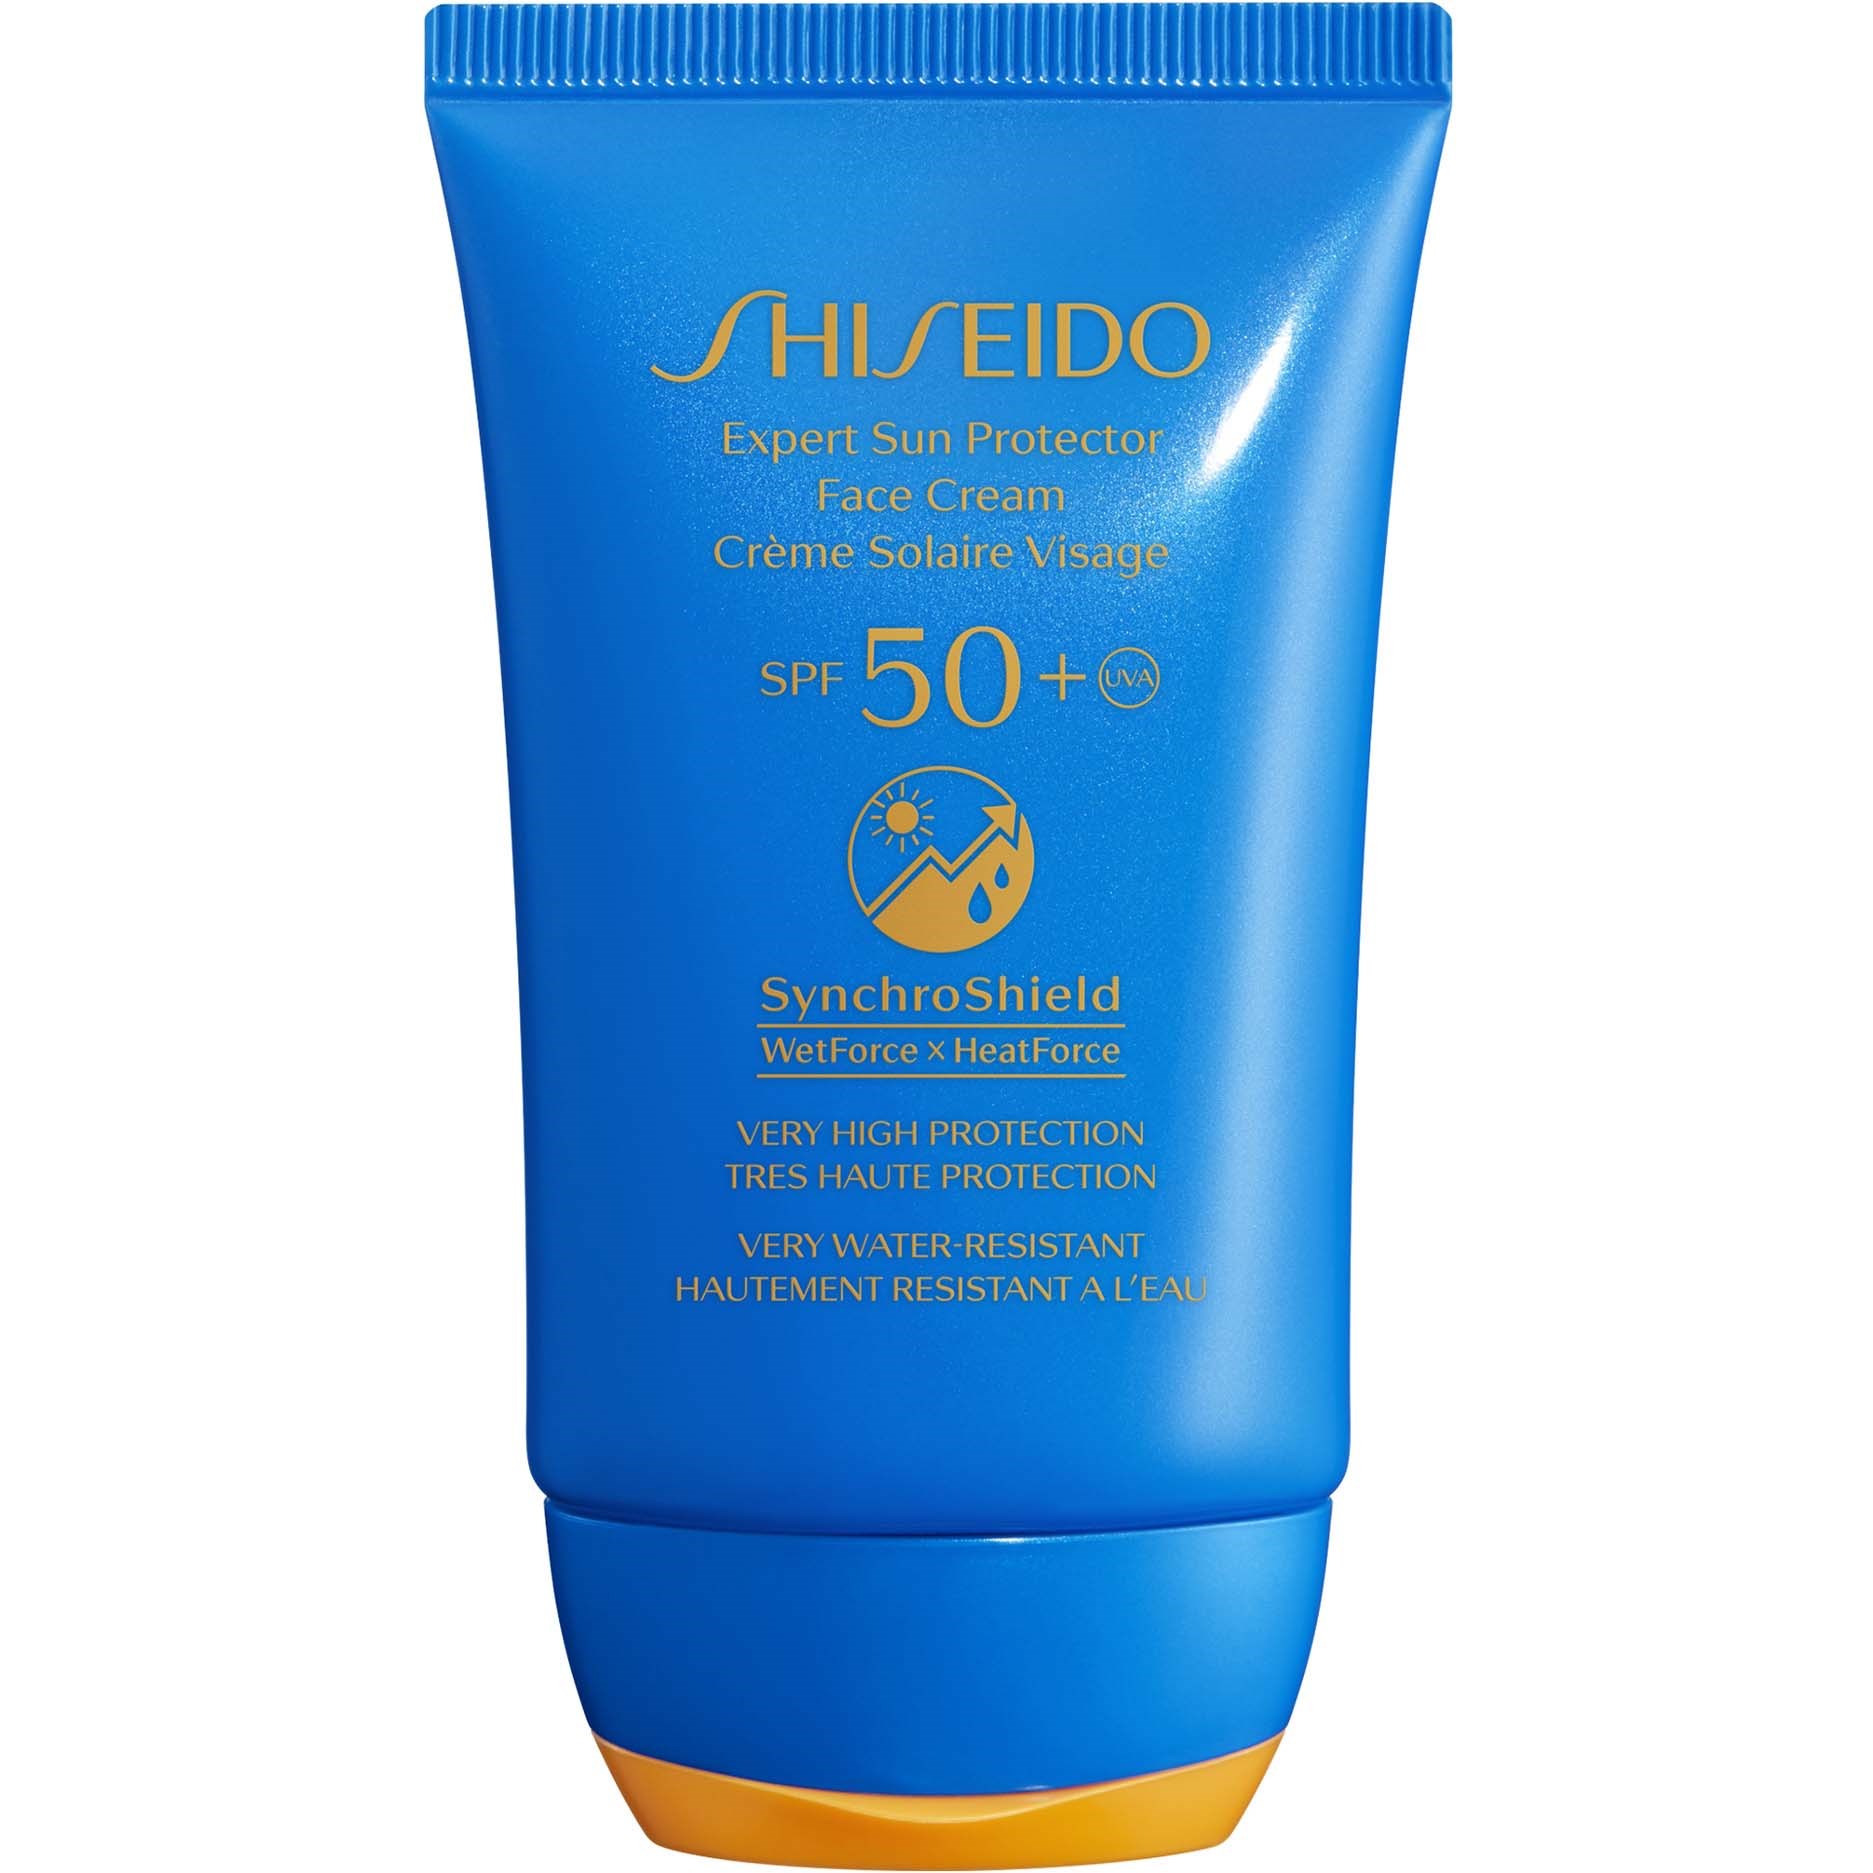 Shiseido Sun 50+ experts pro cream